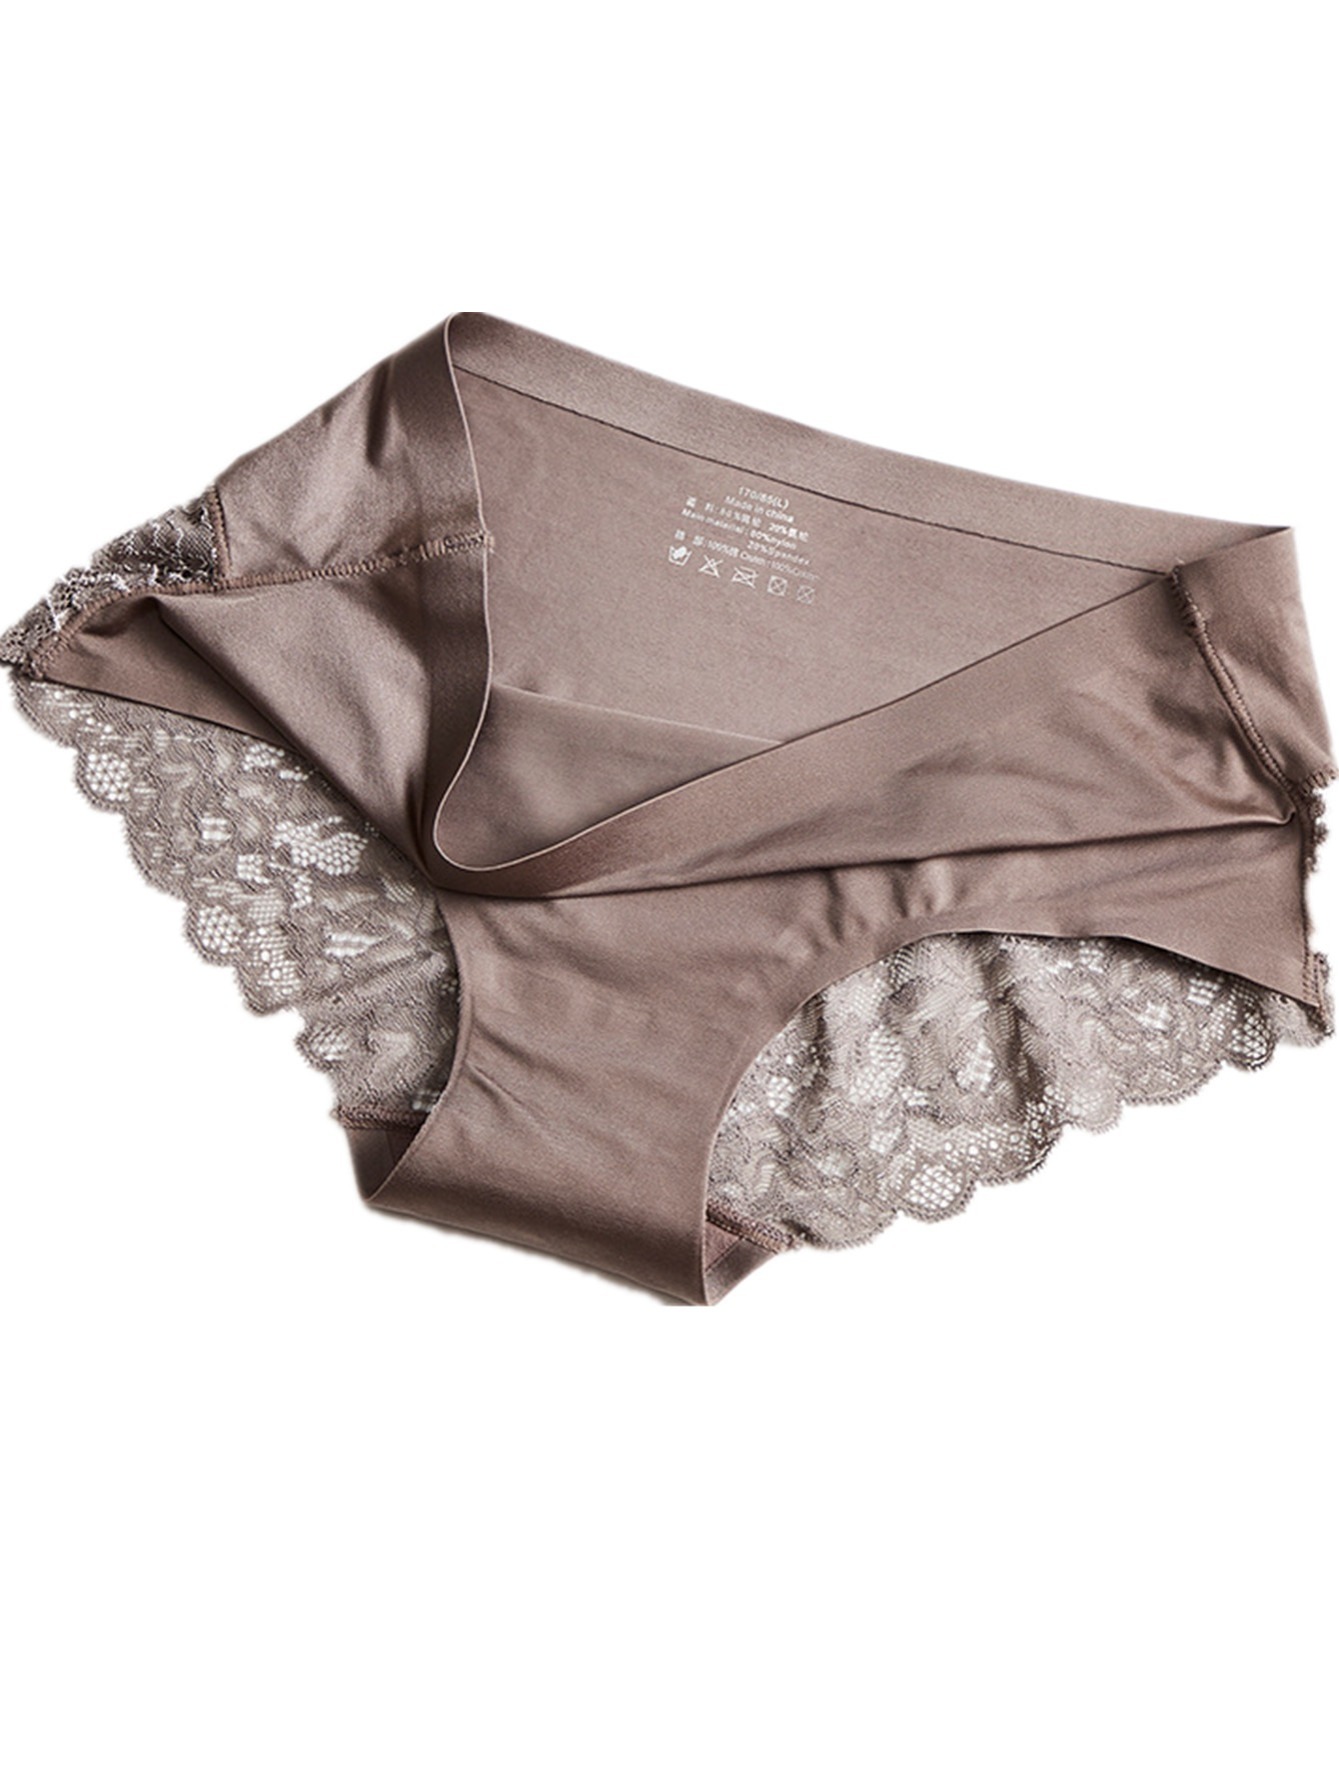 Women Soft Lace Panties Ice Silk Seamless Underwear Women Briefs Underpants  M-XXL XL